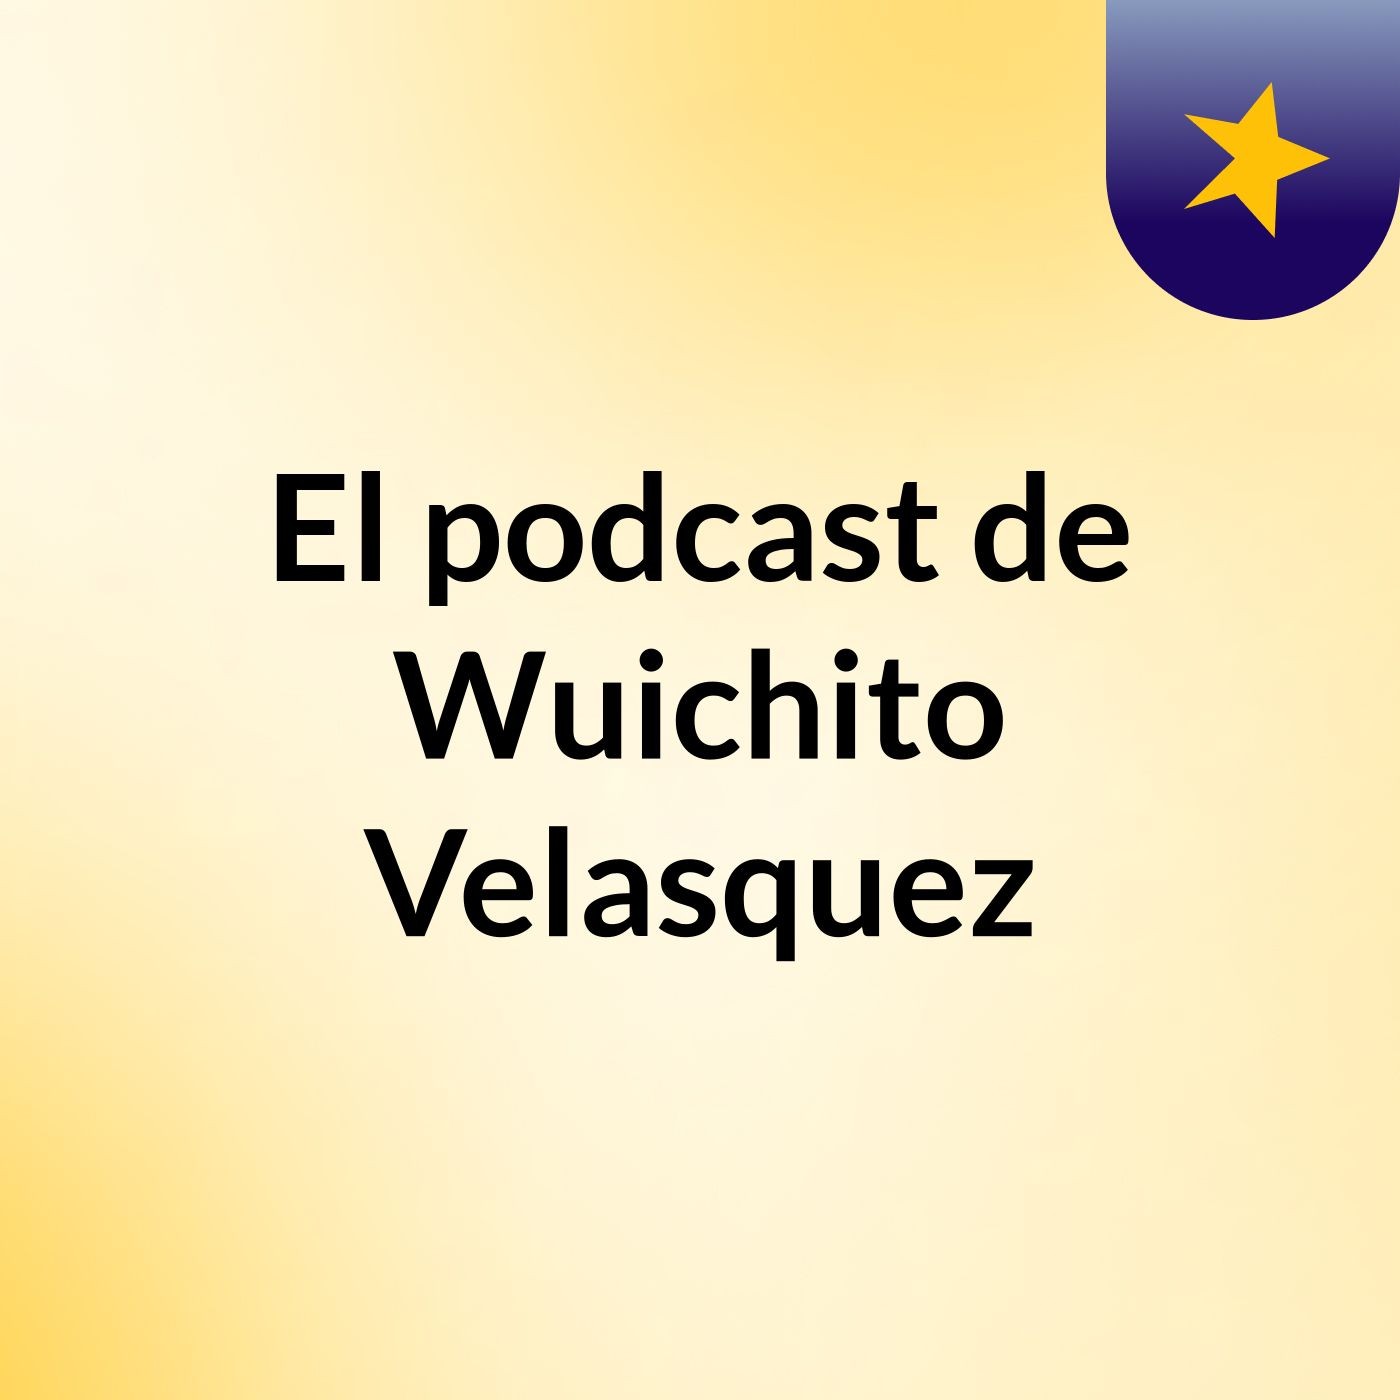 El podcast de Wuichito Velasquez